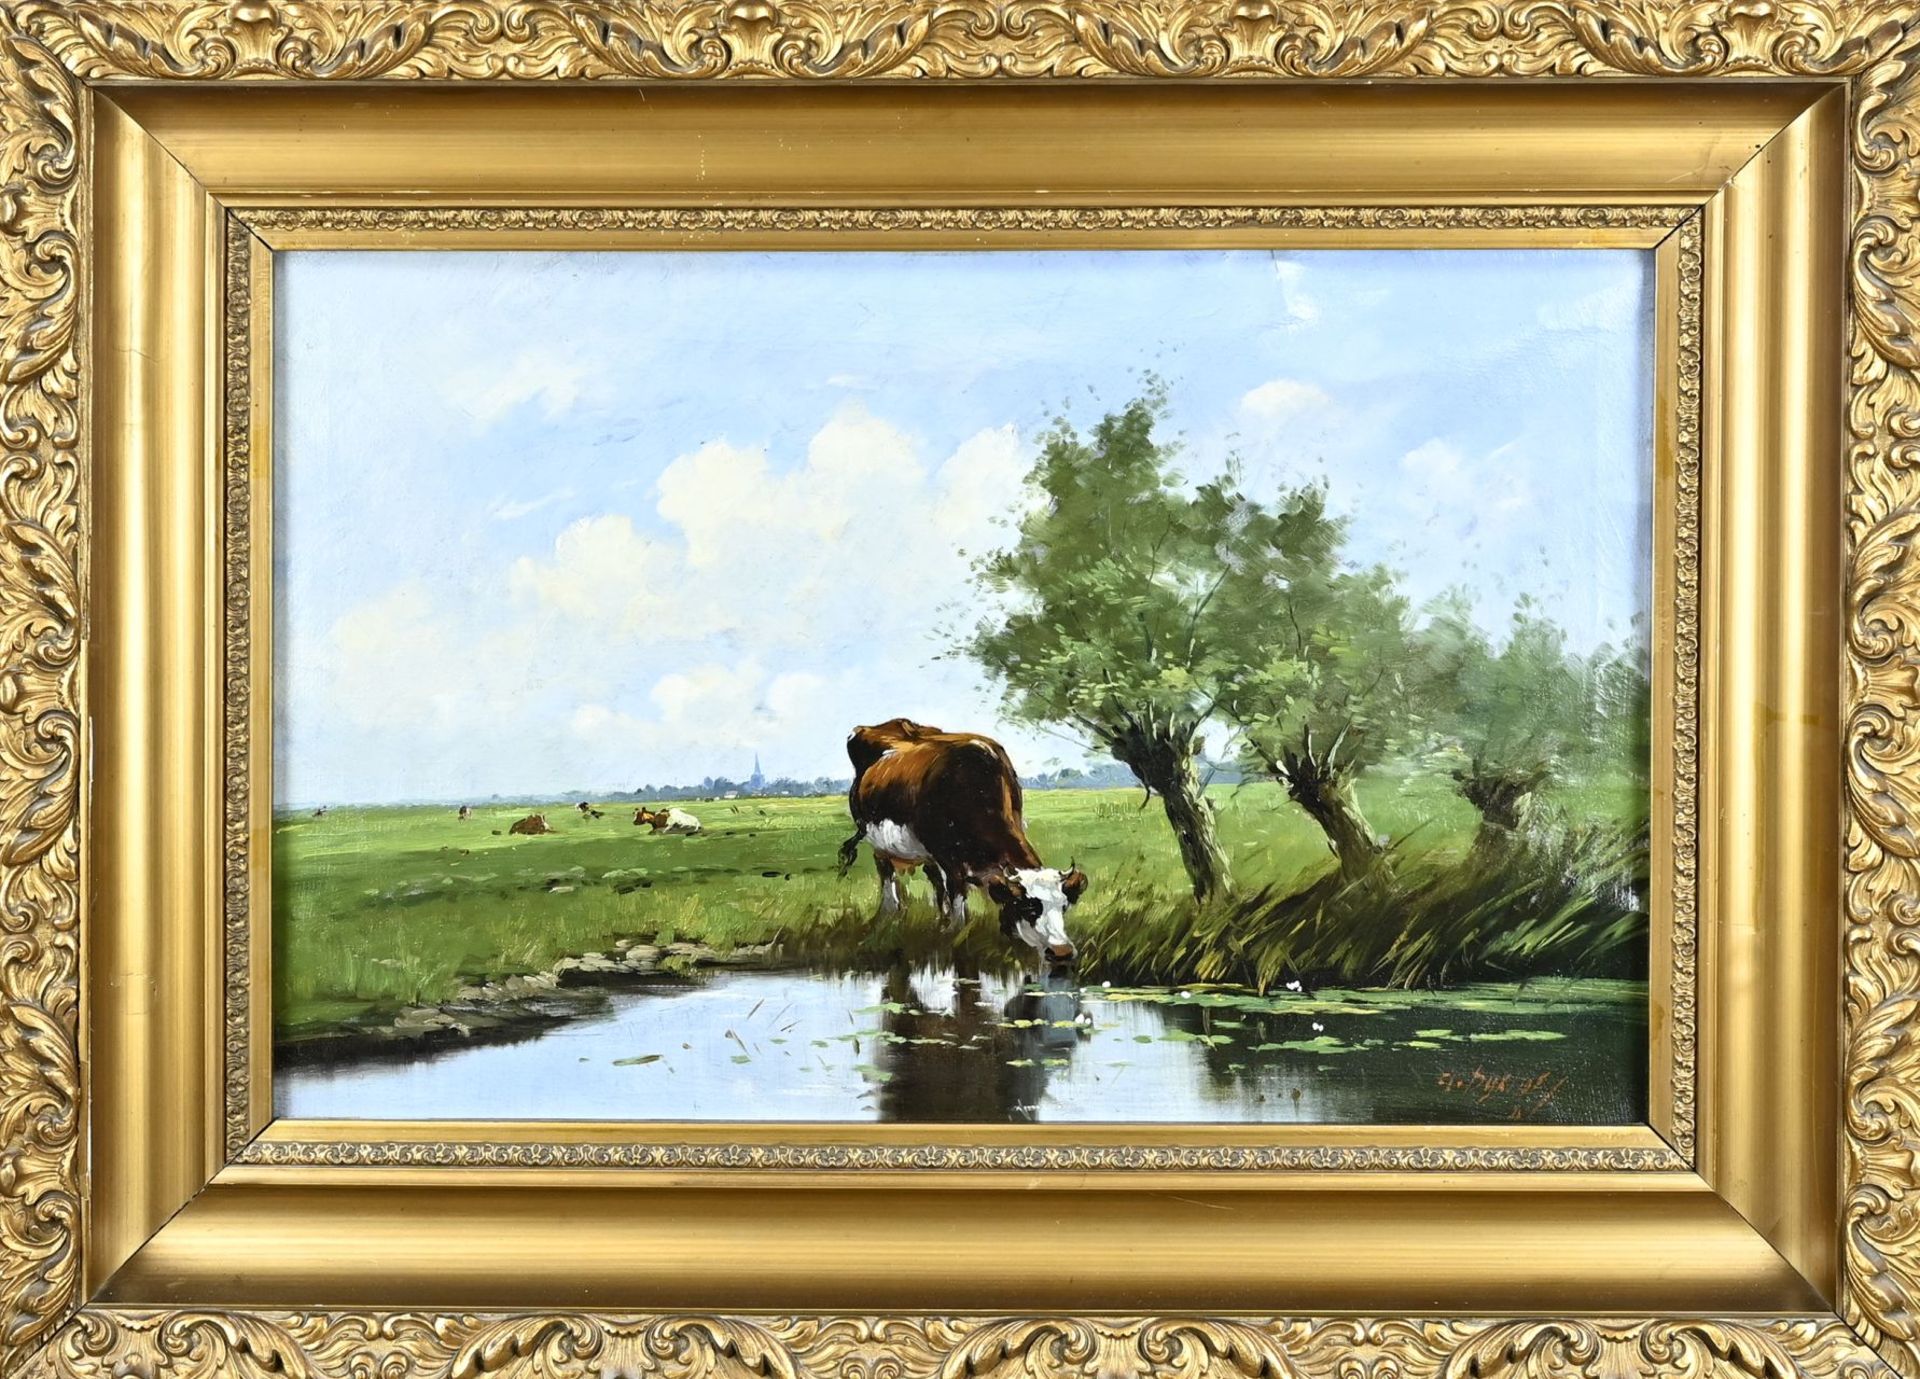 C. van Dijkhof, Landscape with cows and pollard willows